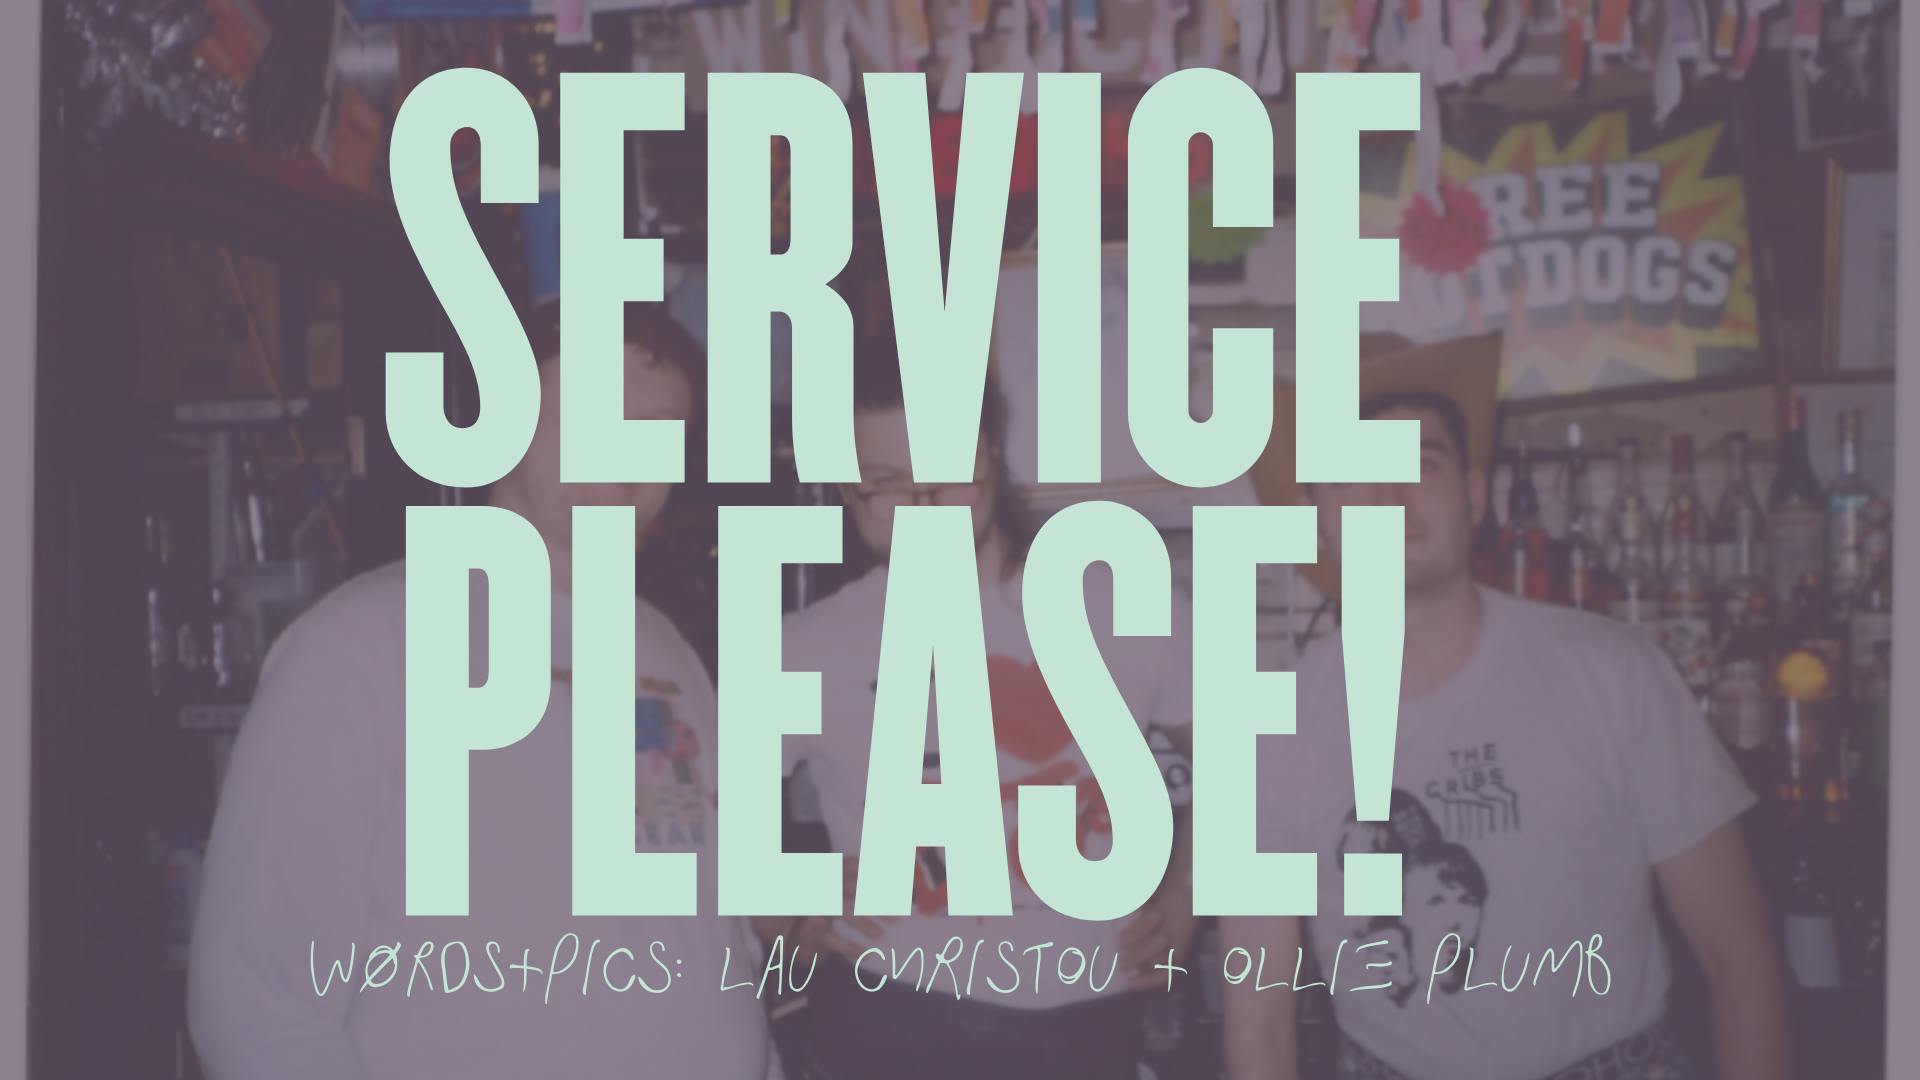 SERVICE PLEASE!